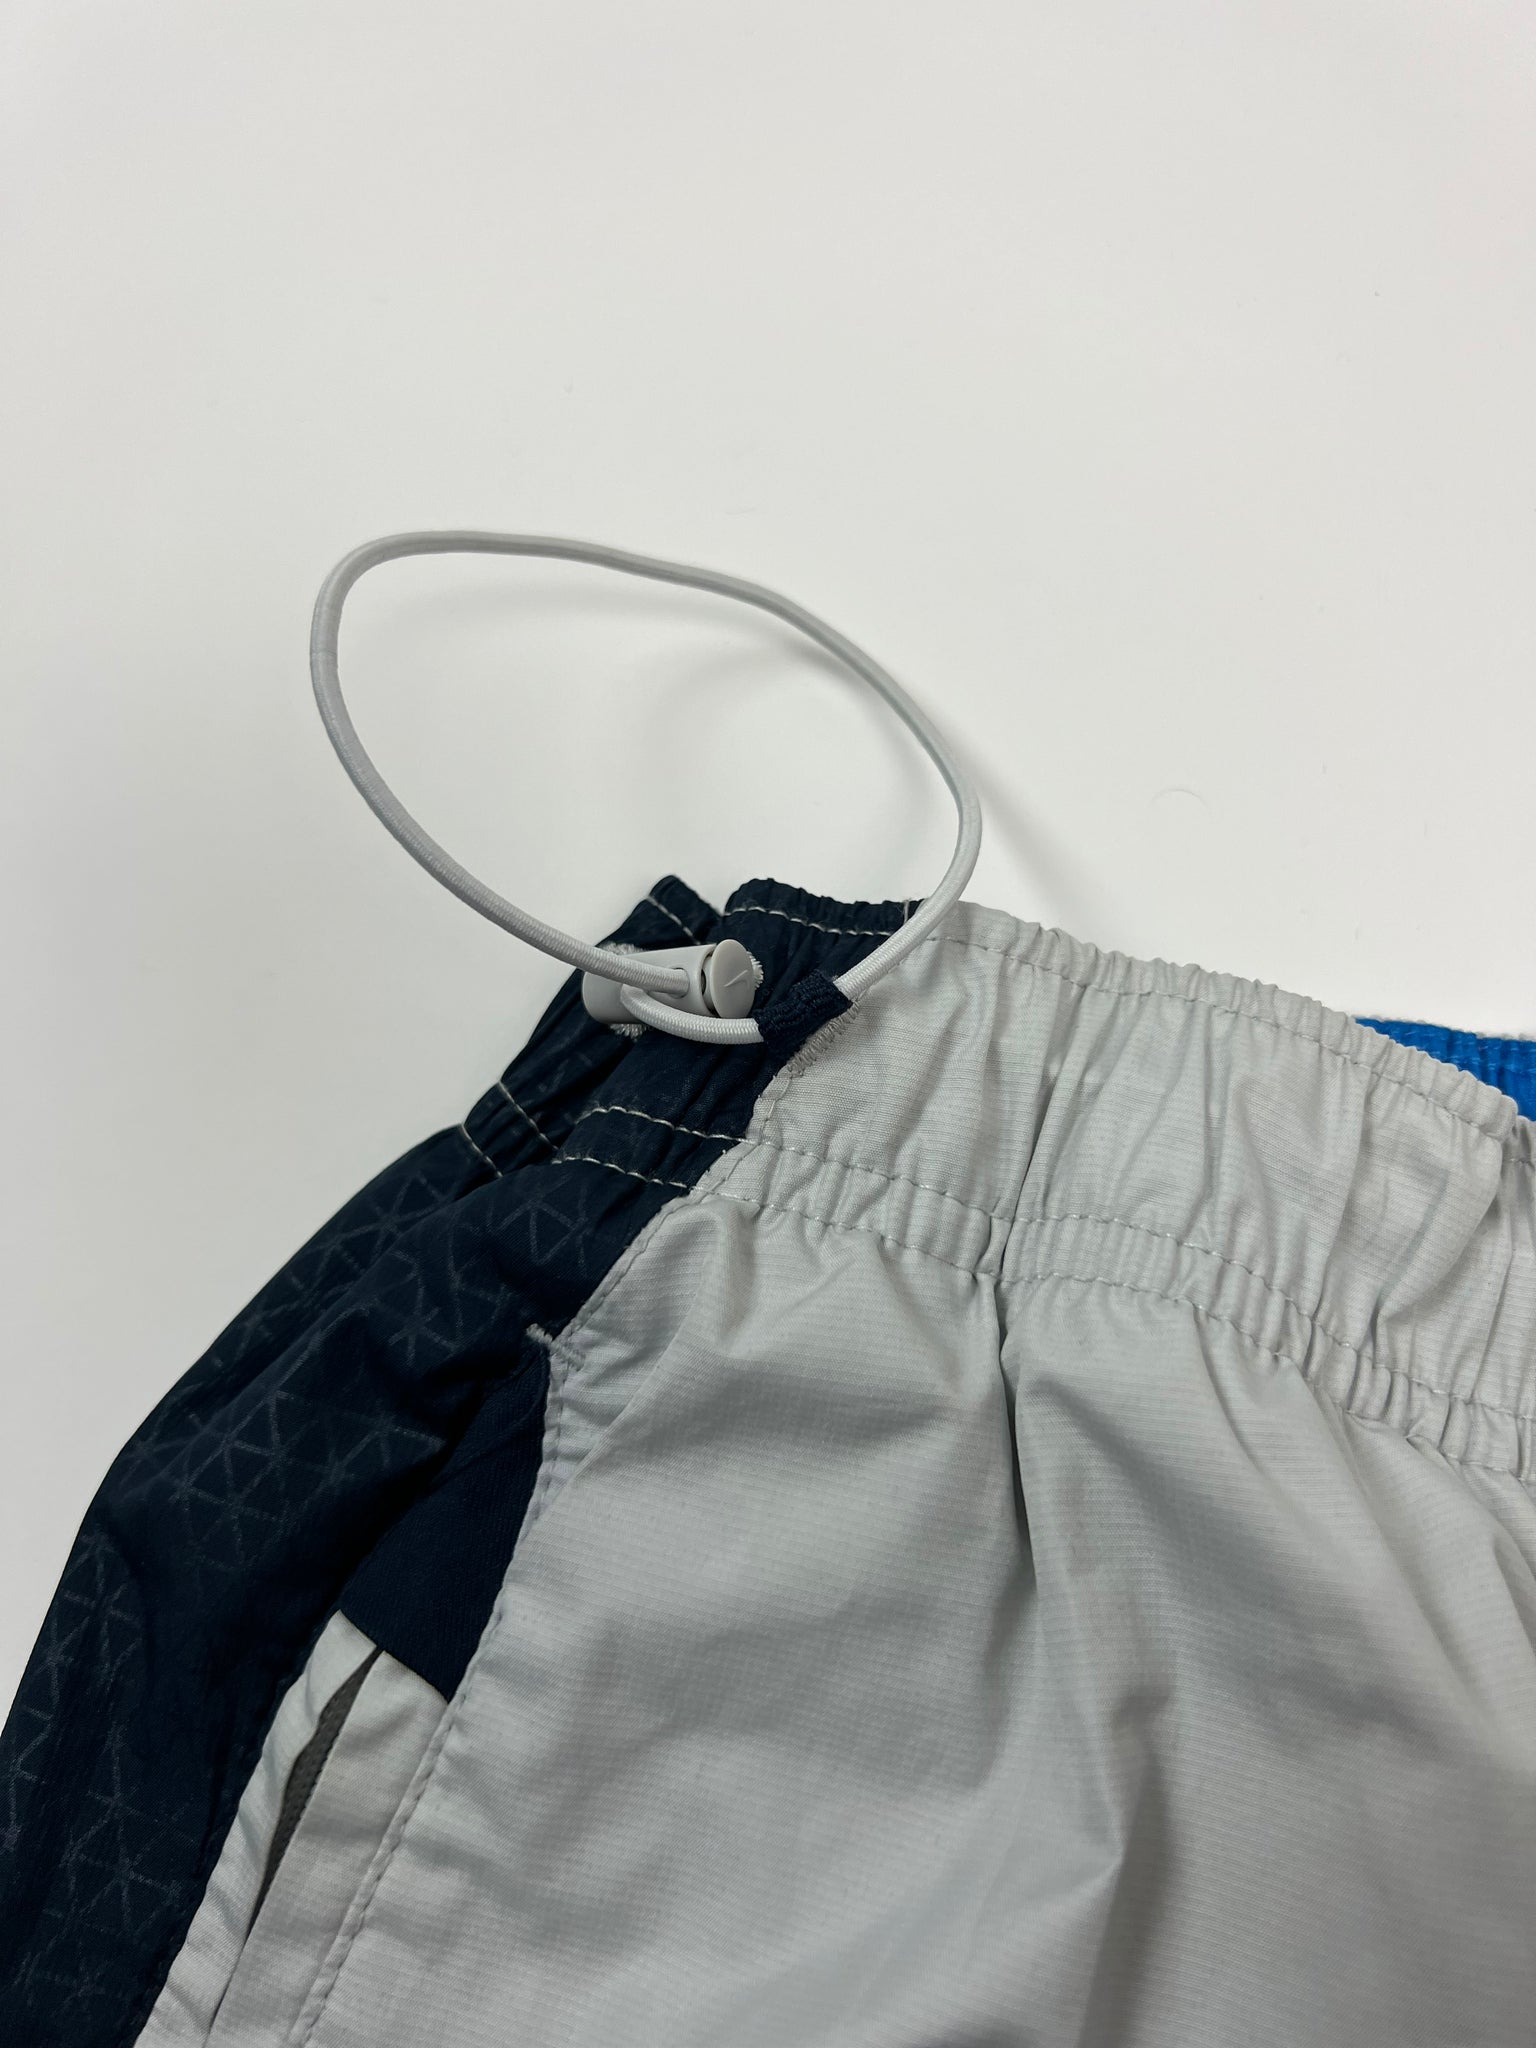 Nike Shox Track Pants (XL)